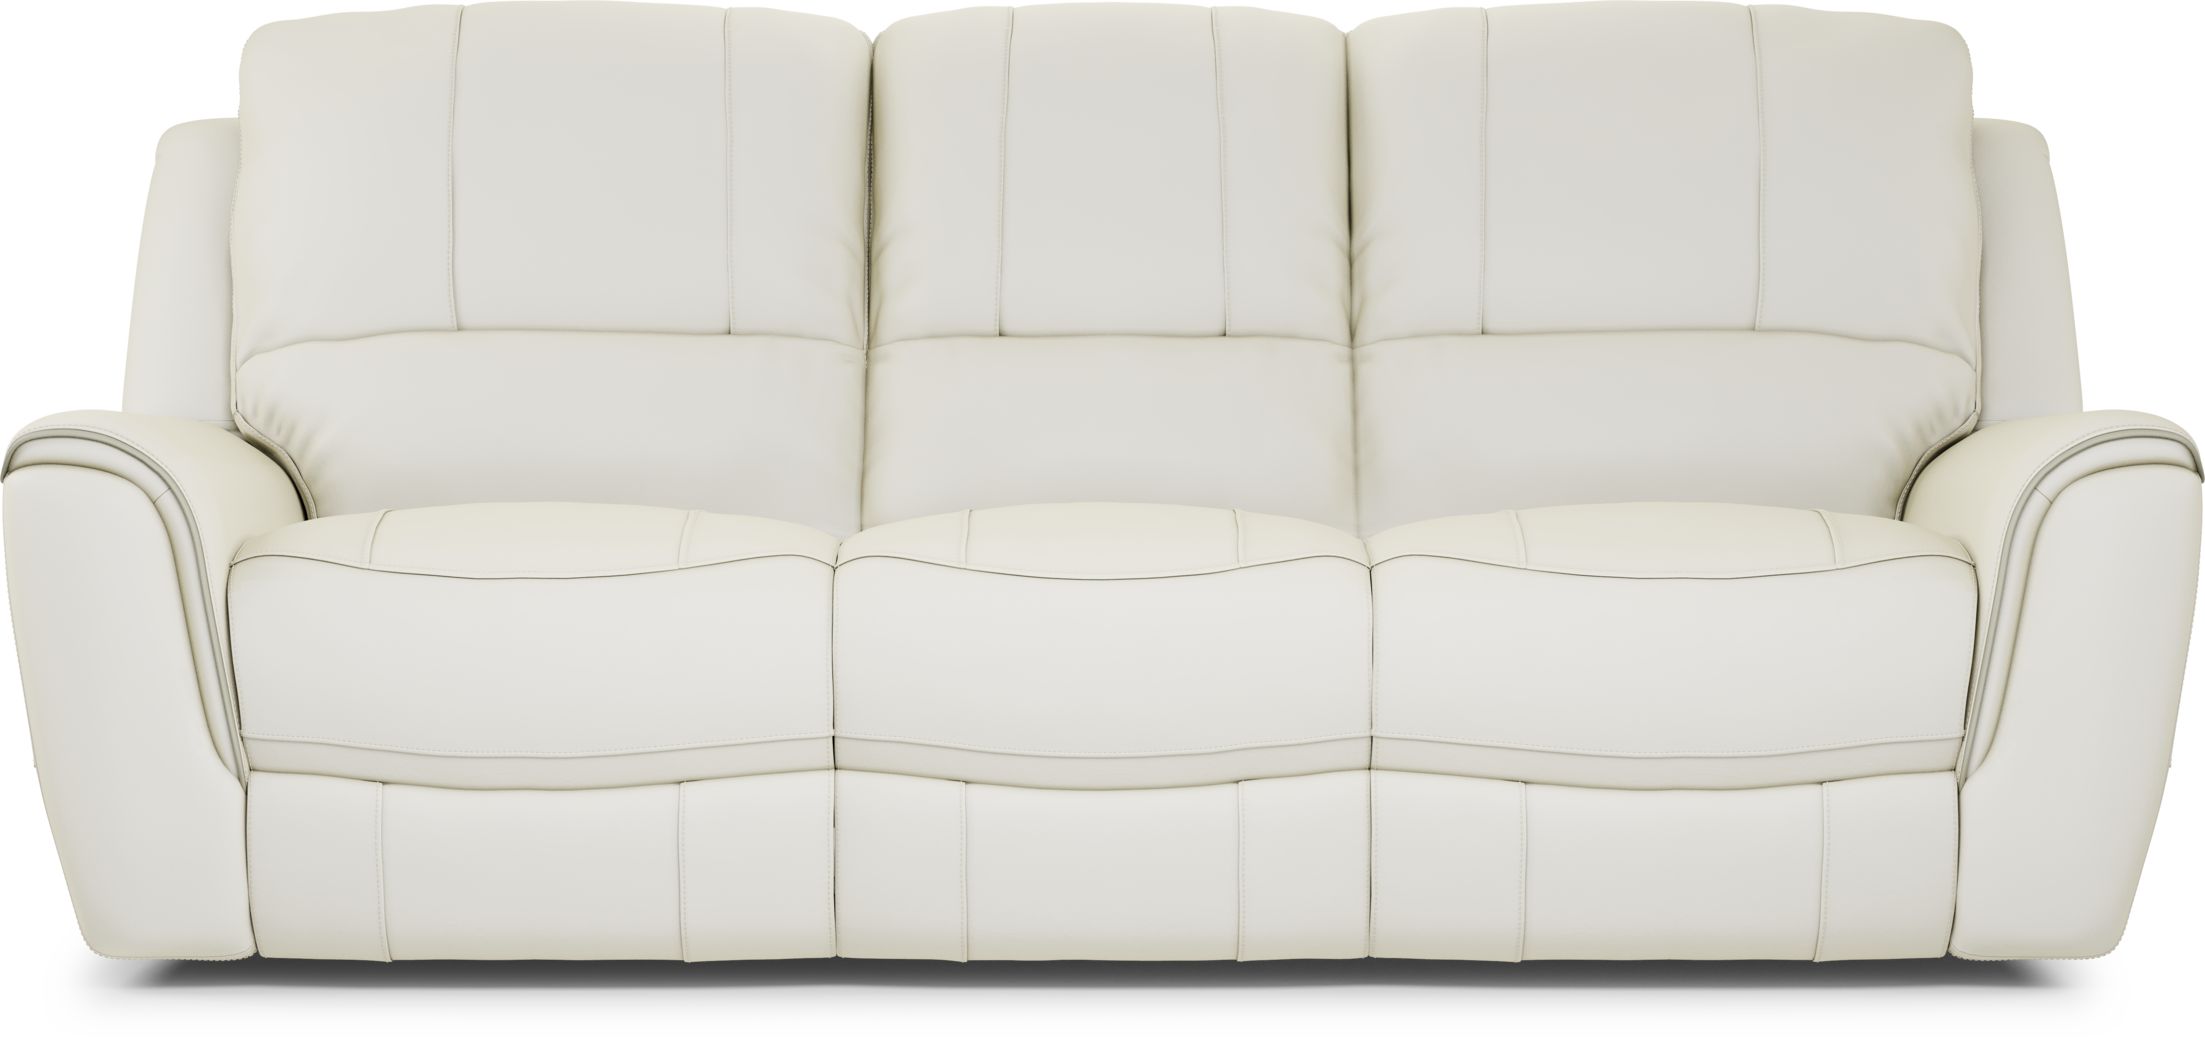 lanzo merlot leather reclining sofa reviews